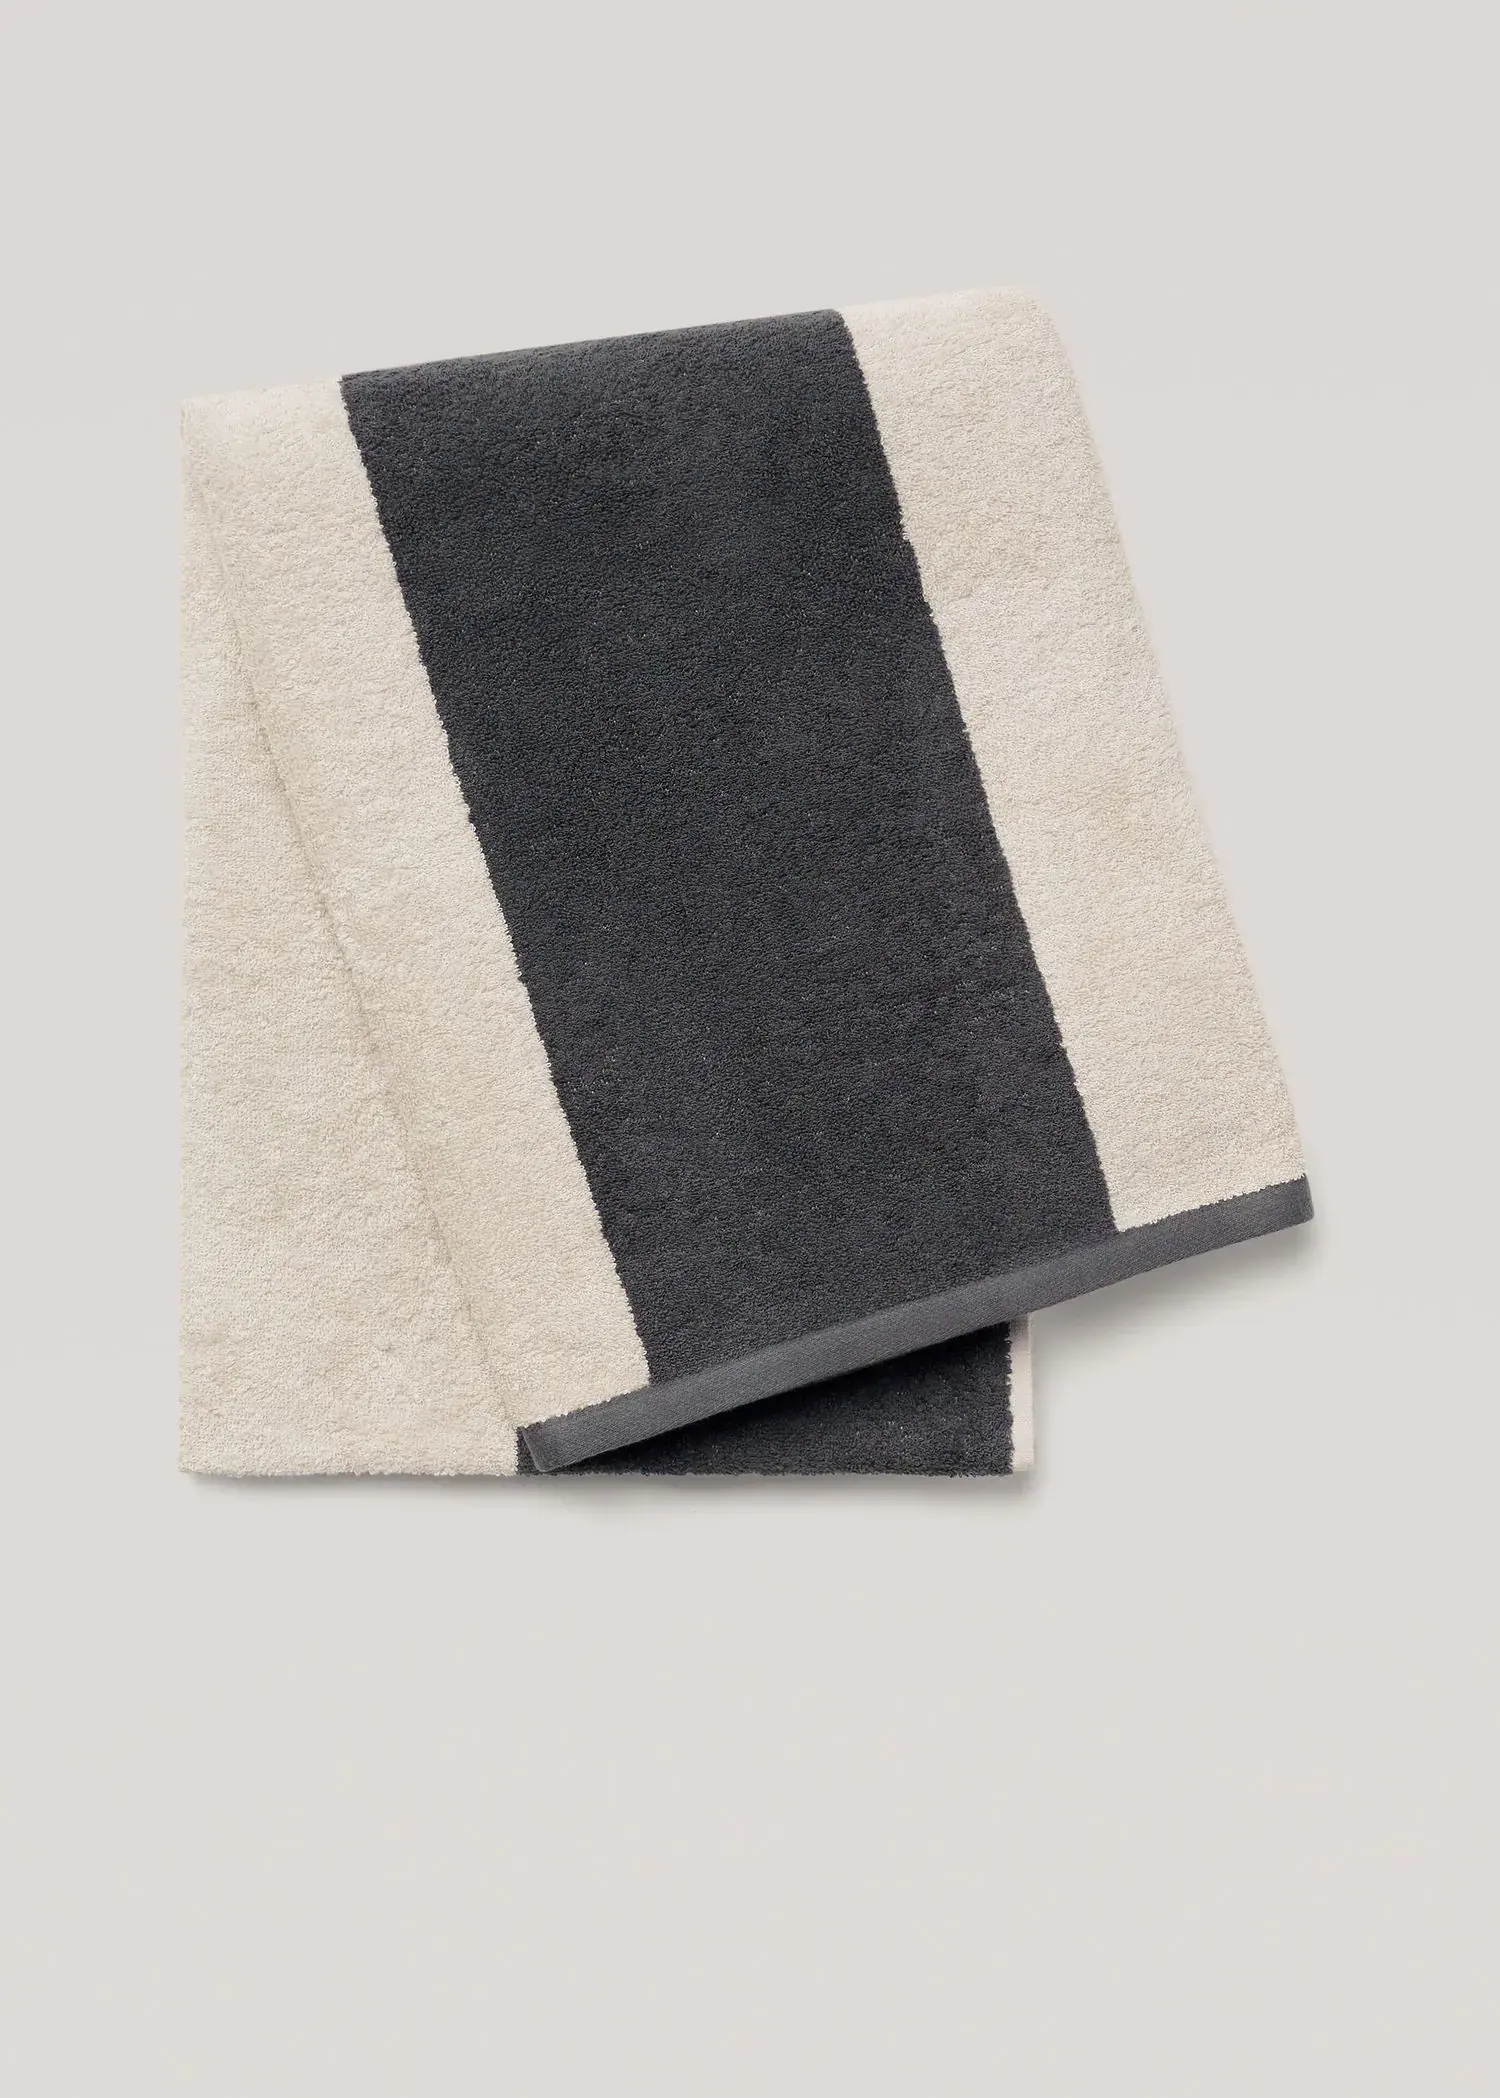 Mango 100% cotton striped beach towel 100x180cm. 1